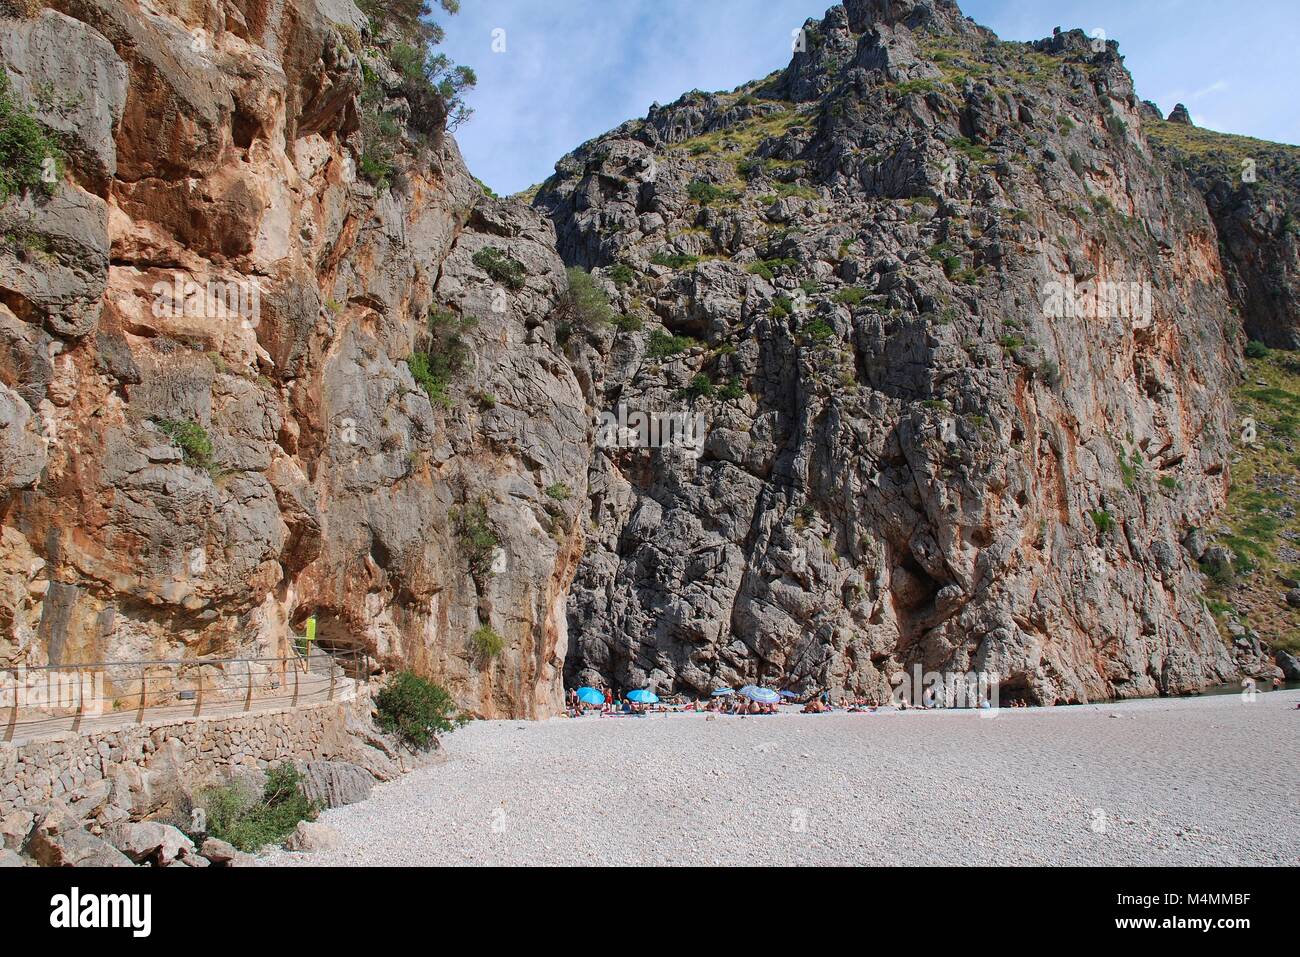 Der Torrent de Pareis River Gorge bei Sa Calobra auf der spanischen Insel Mallorca. Stockfoto